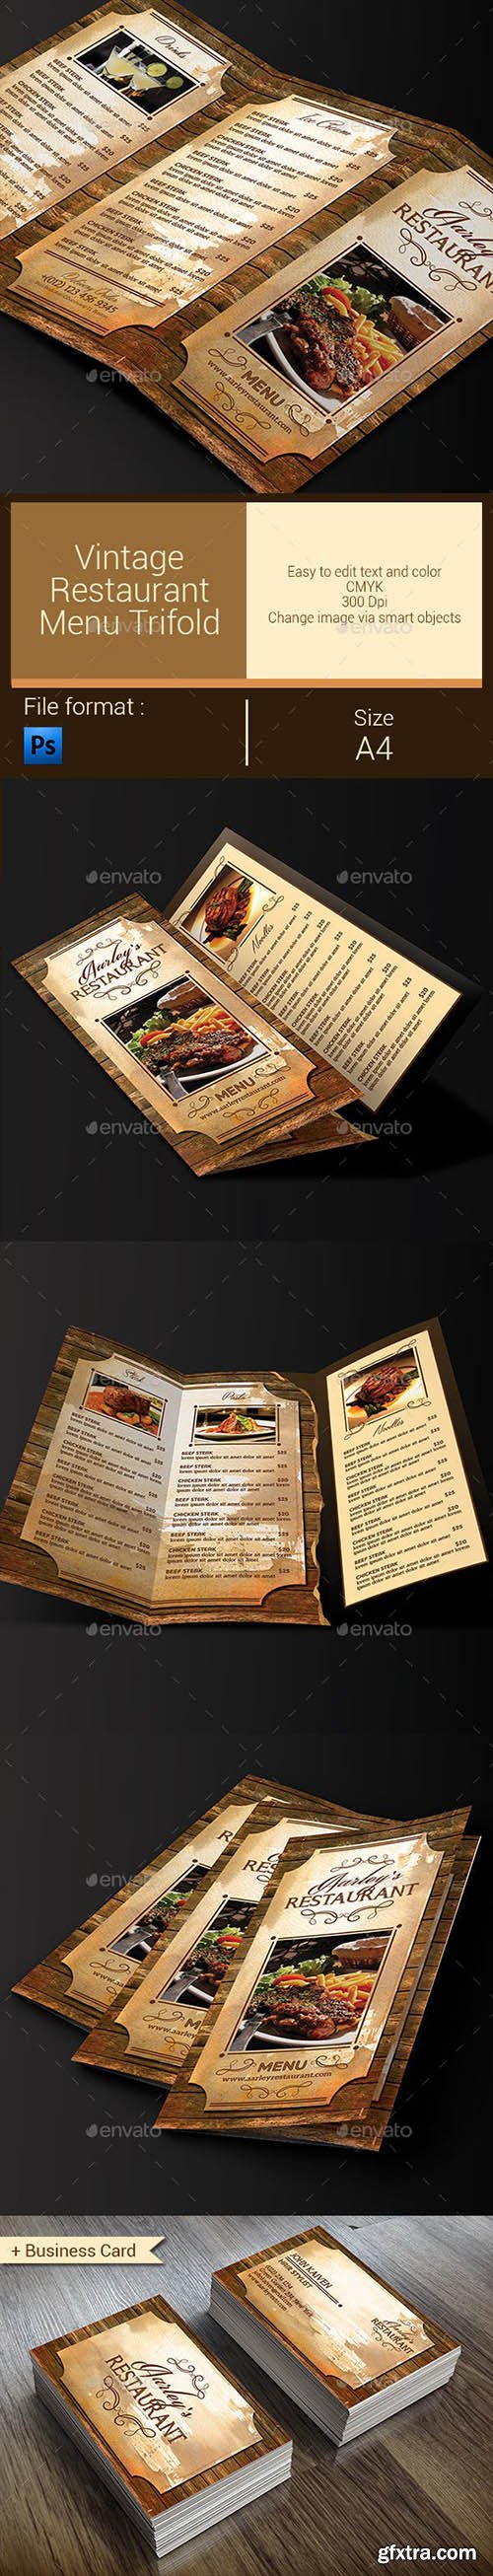 Vintage Restaurant Menu Trifold + Business Card 10297436